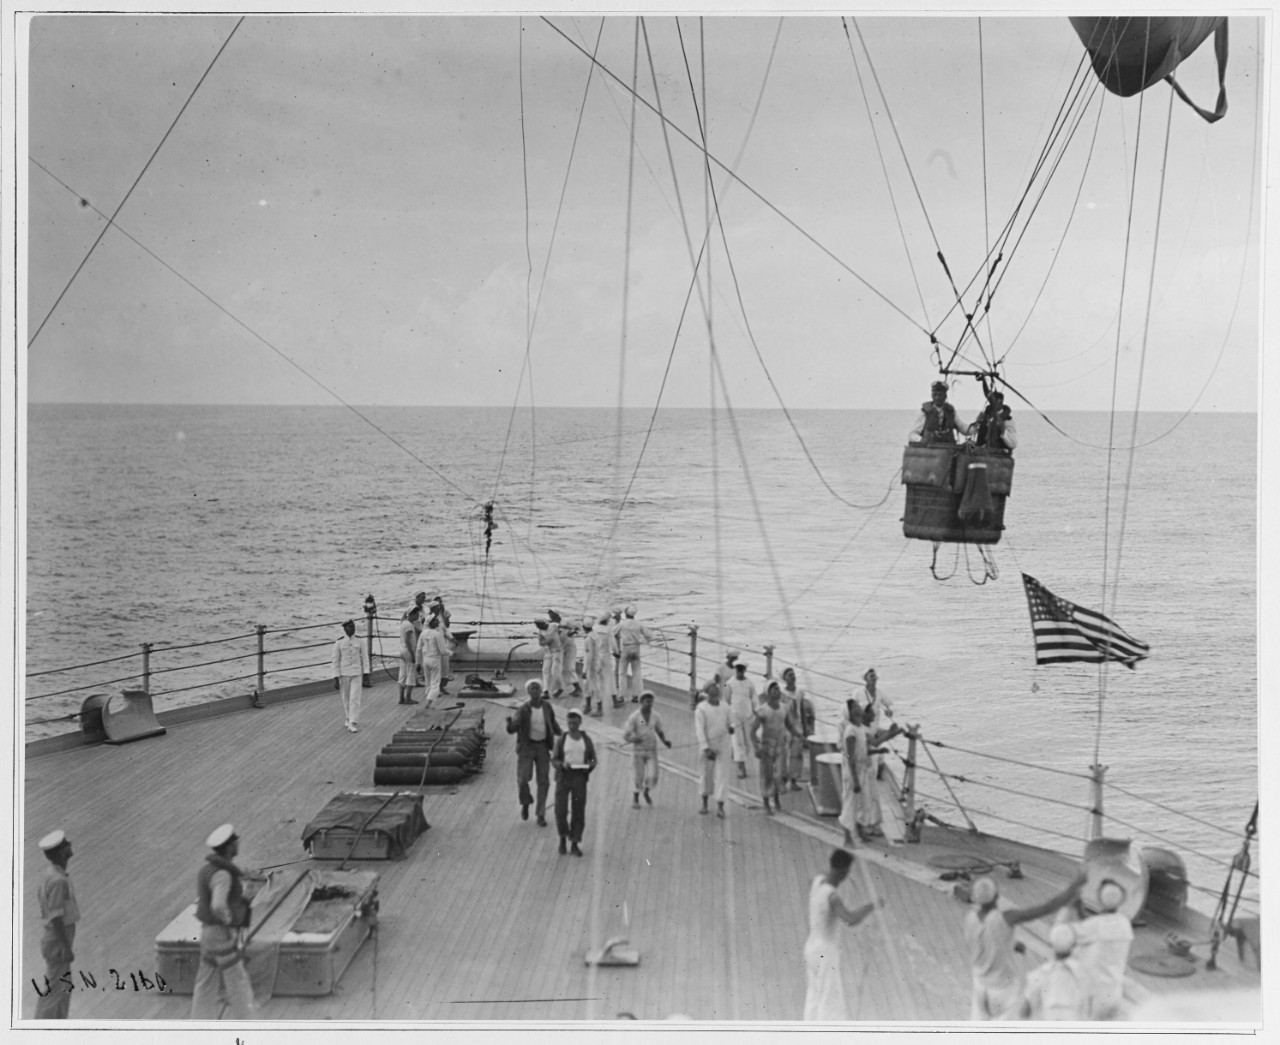 Battleship at sea in 1921.